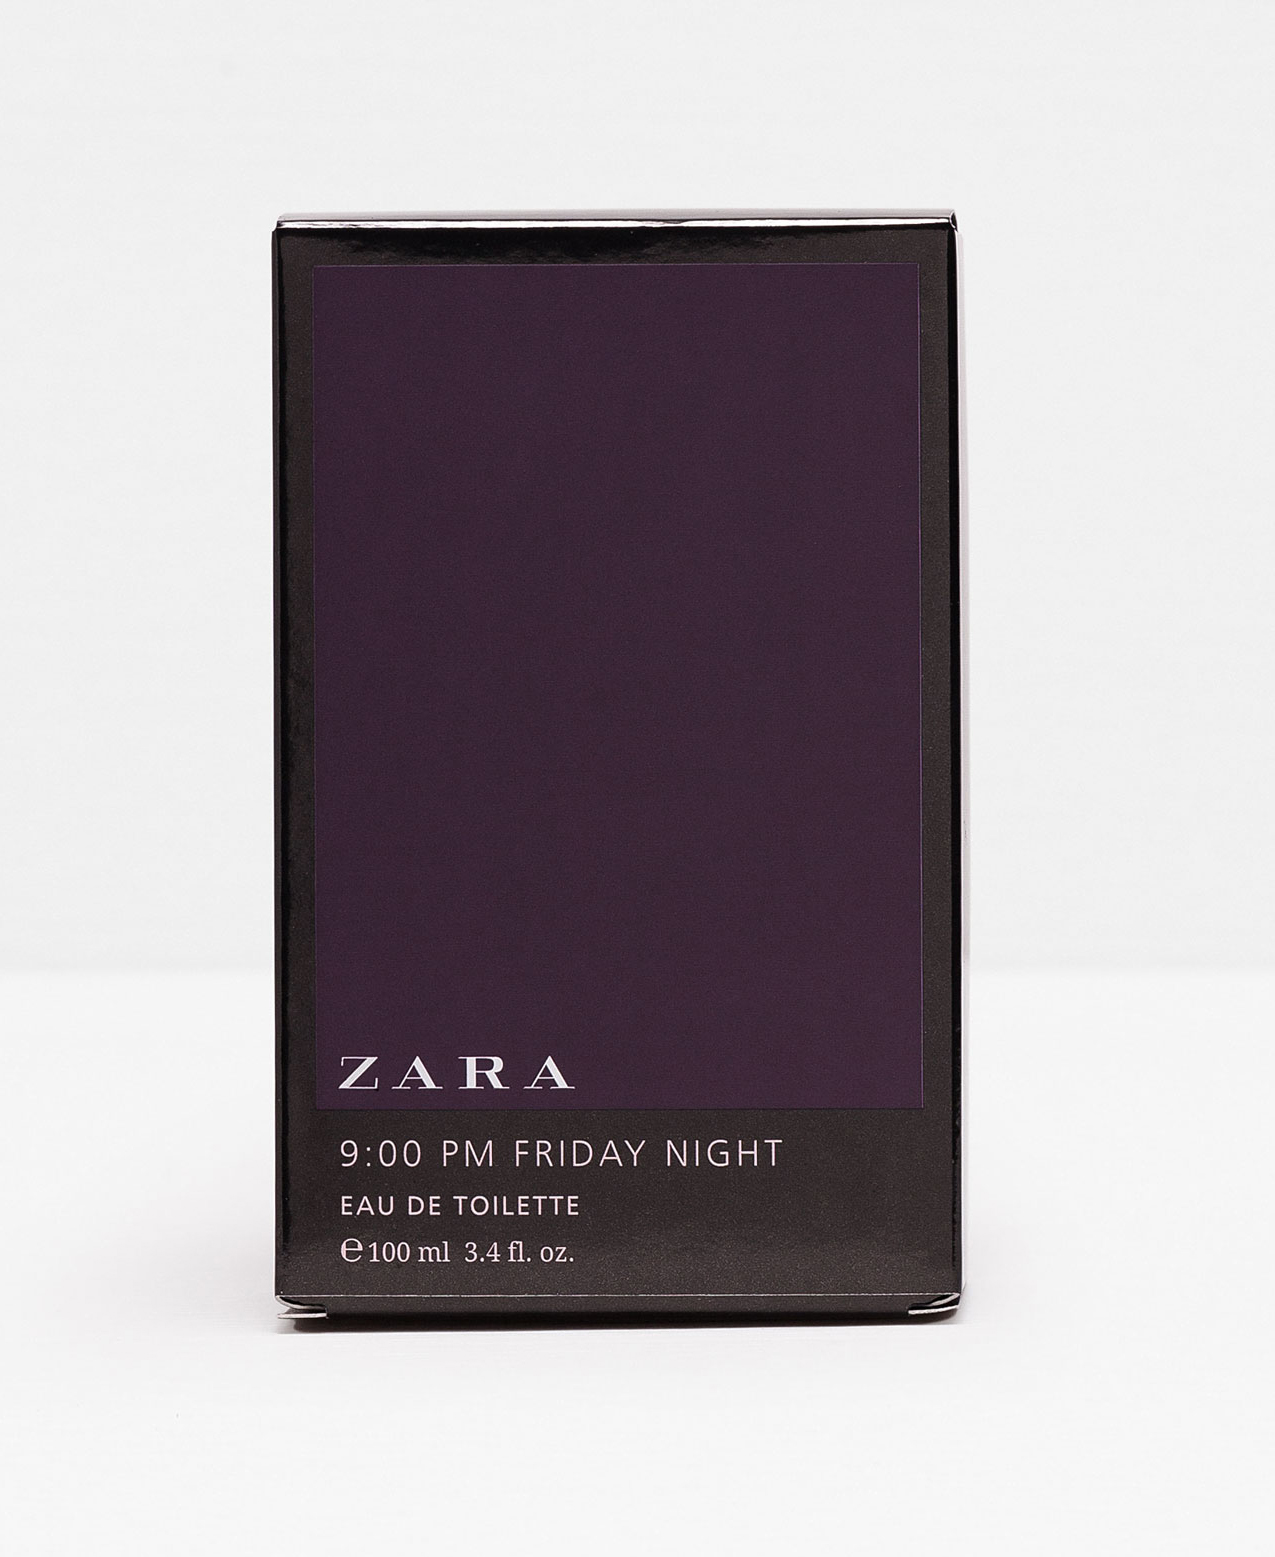 zara 9pm friday night perfume